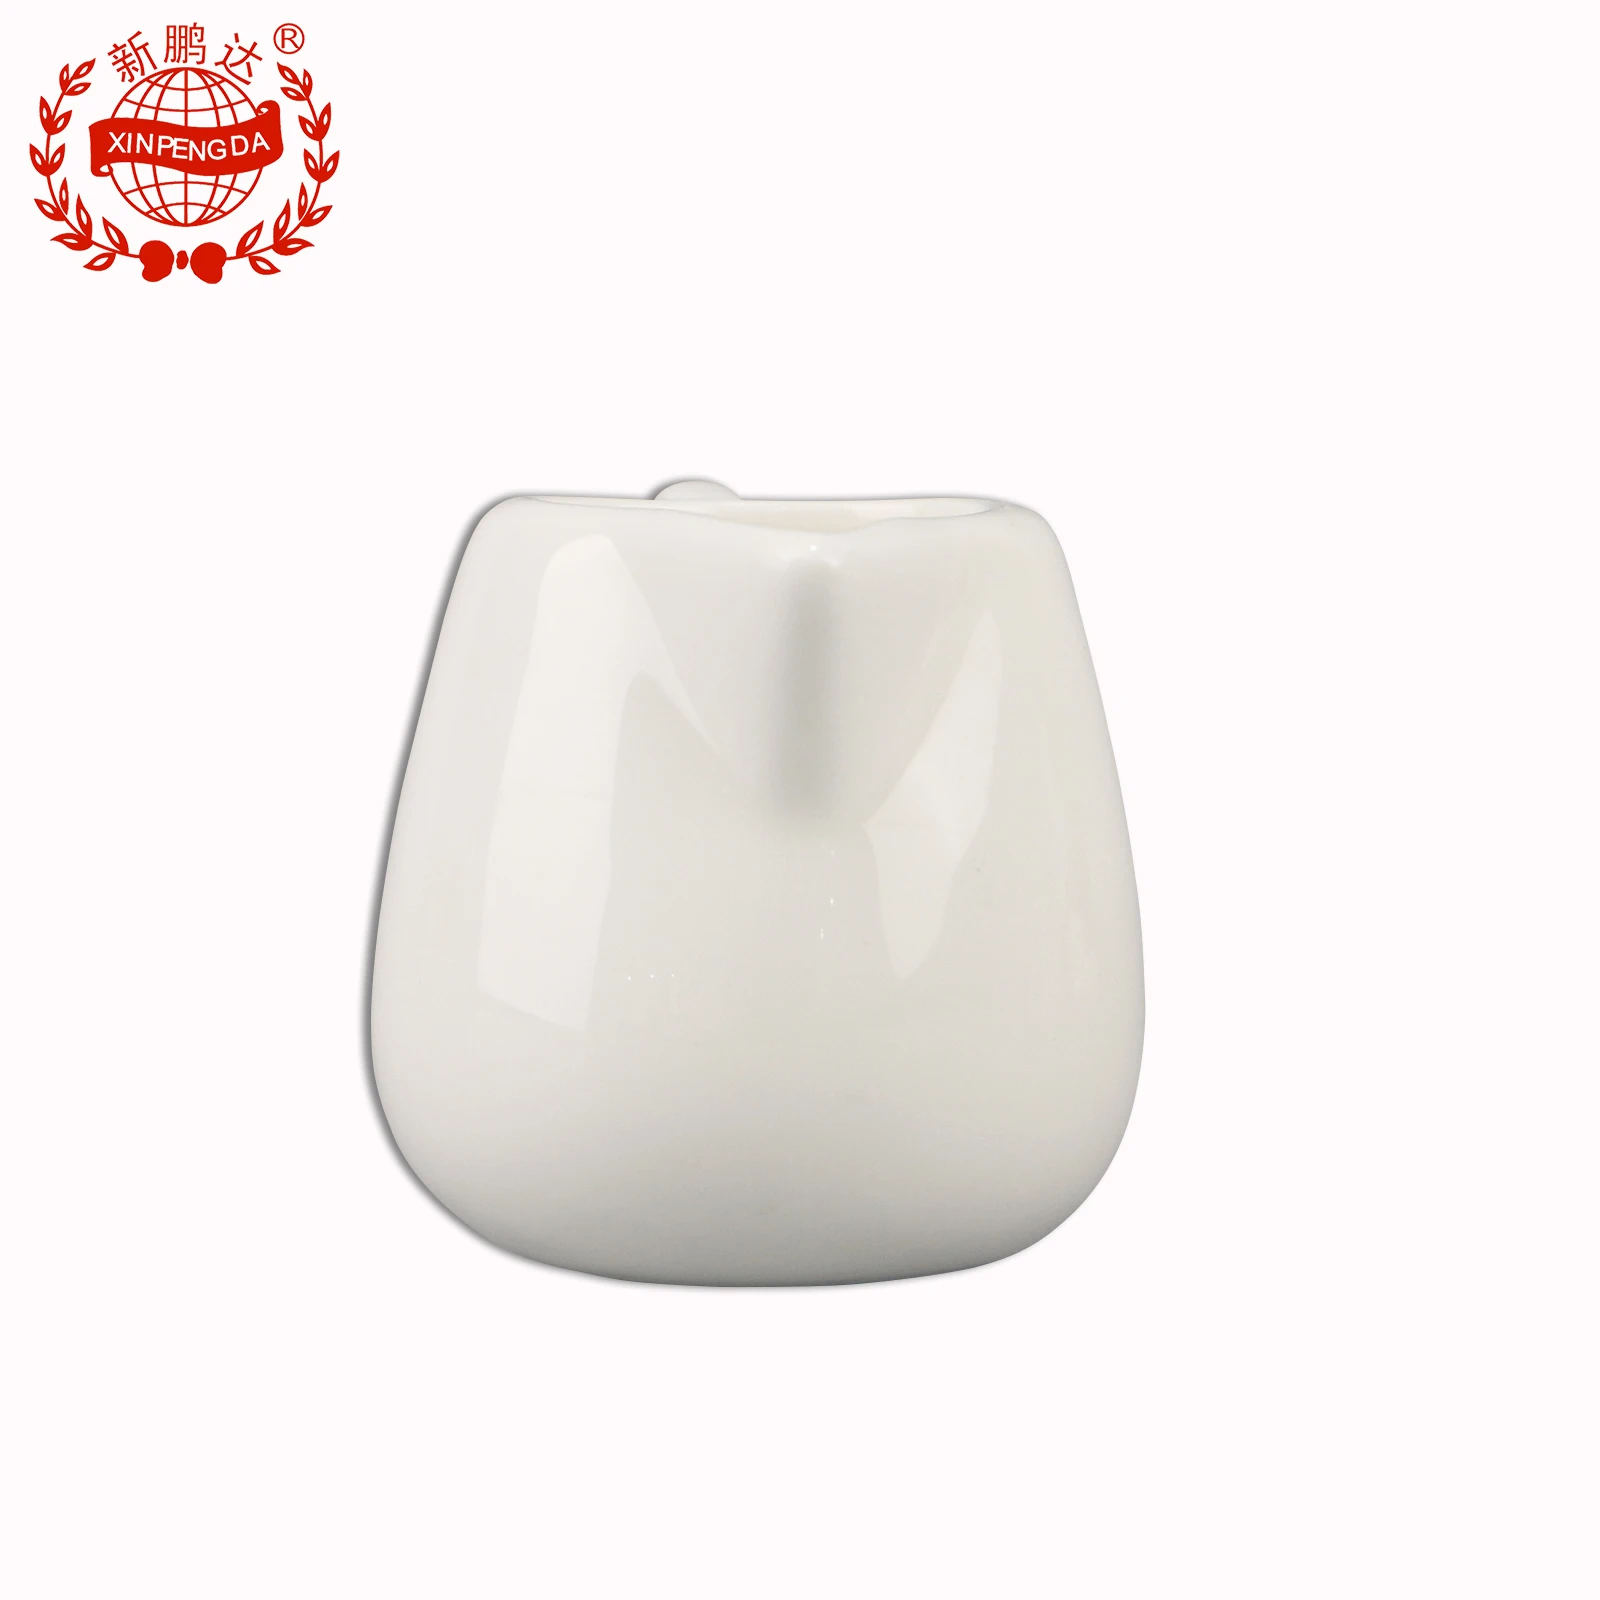 Details about   Mini Ceramic Milk Bottles {130ml} Cafe Restaurant Catering Home Supplies 